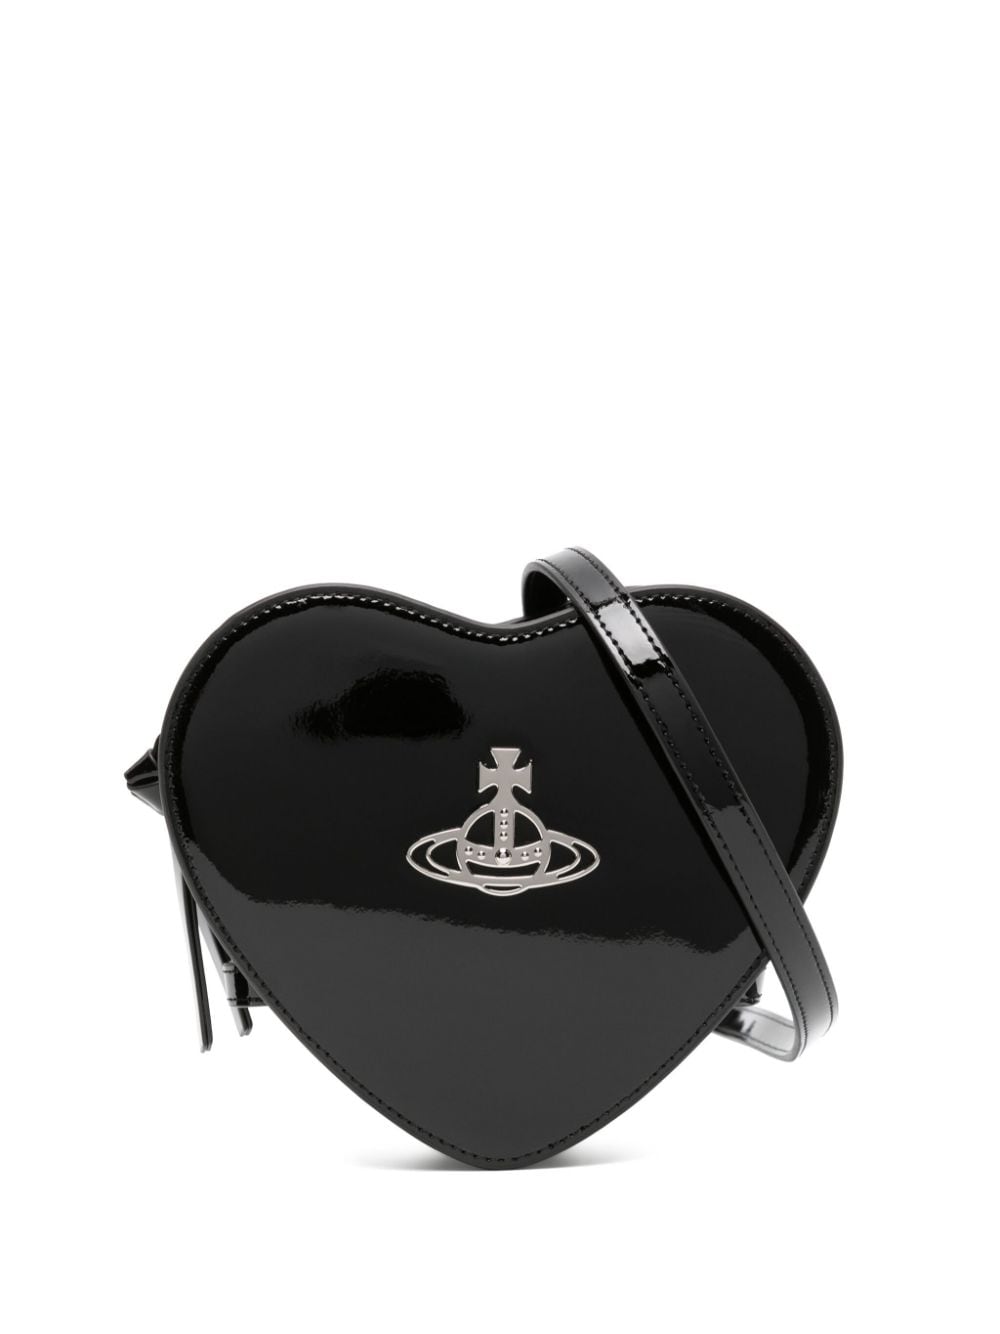 Vivienne Westwood Louise Heart Leather Bag In Black